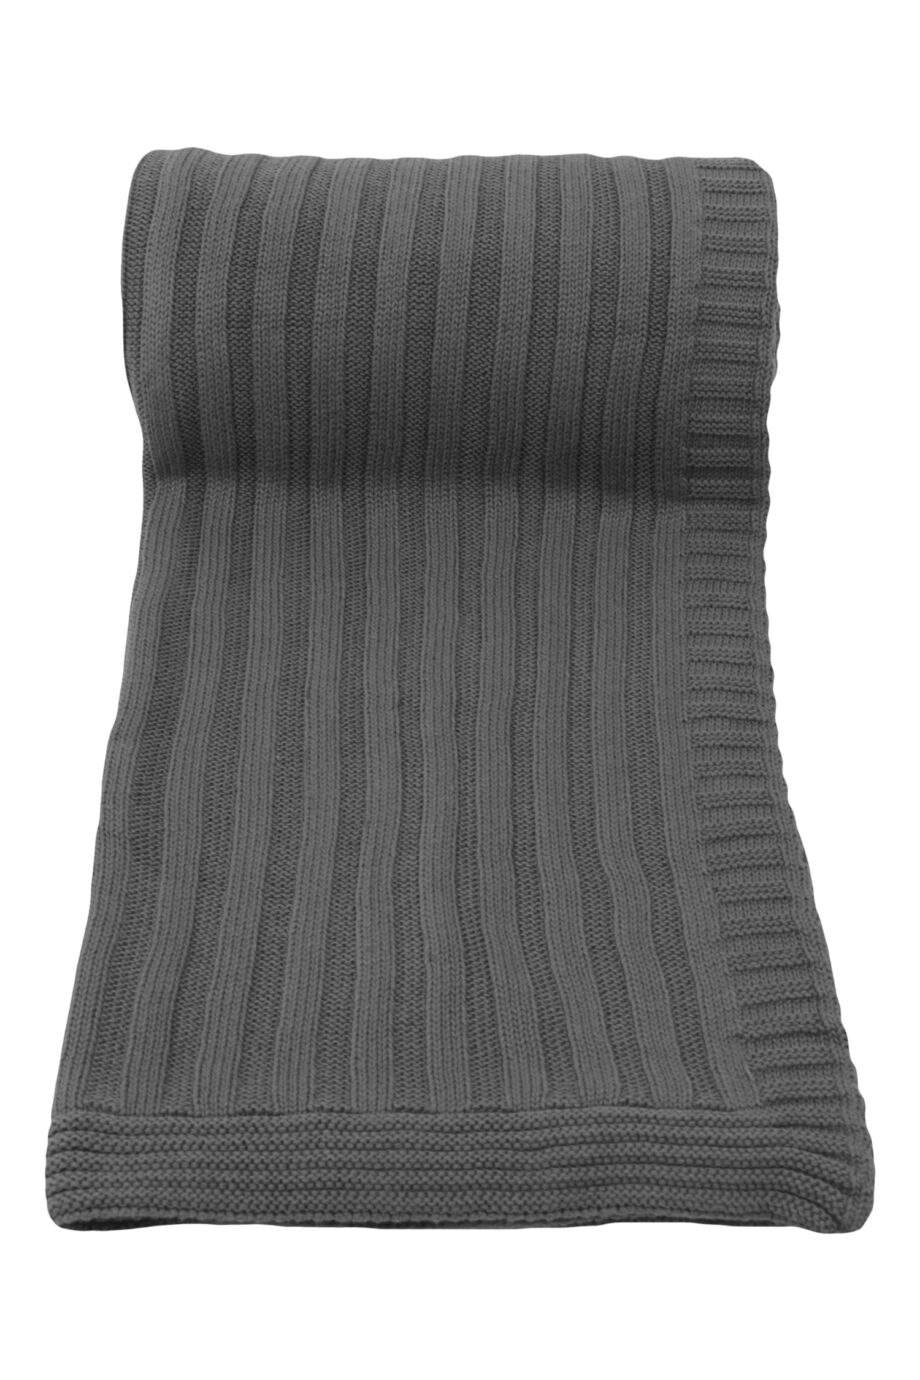 ribs shark grey knitted cotton throw xlarge